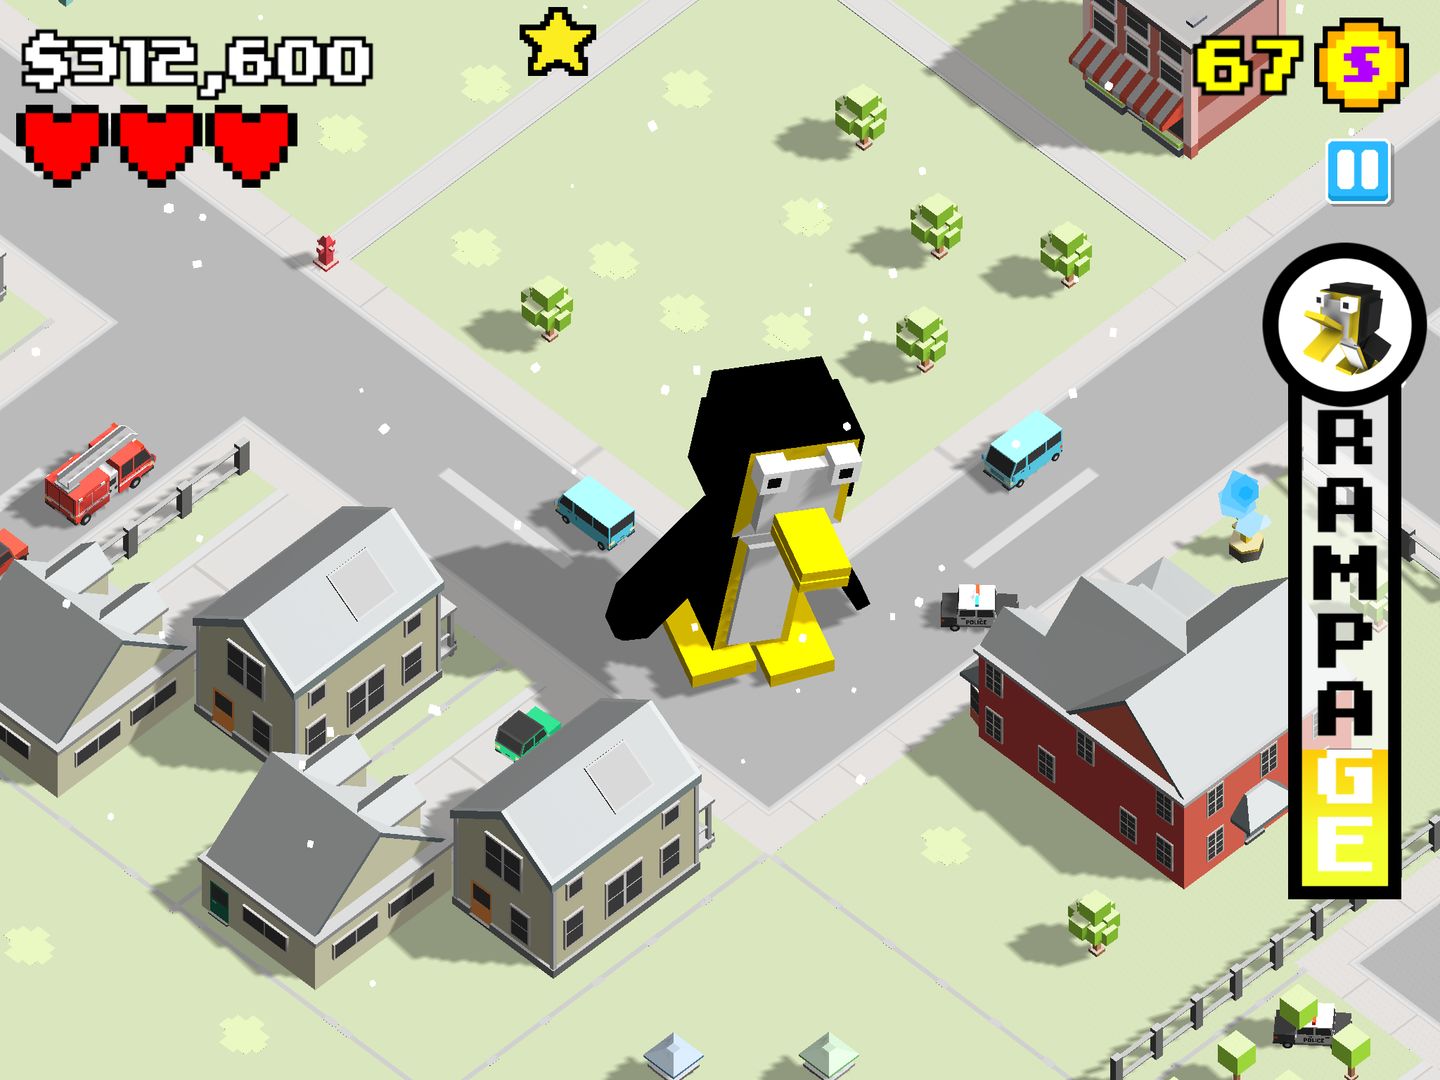 Screenshot of Smashy City - Monster Game